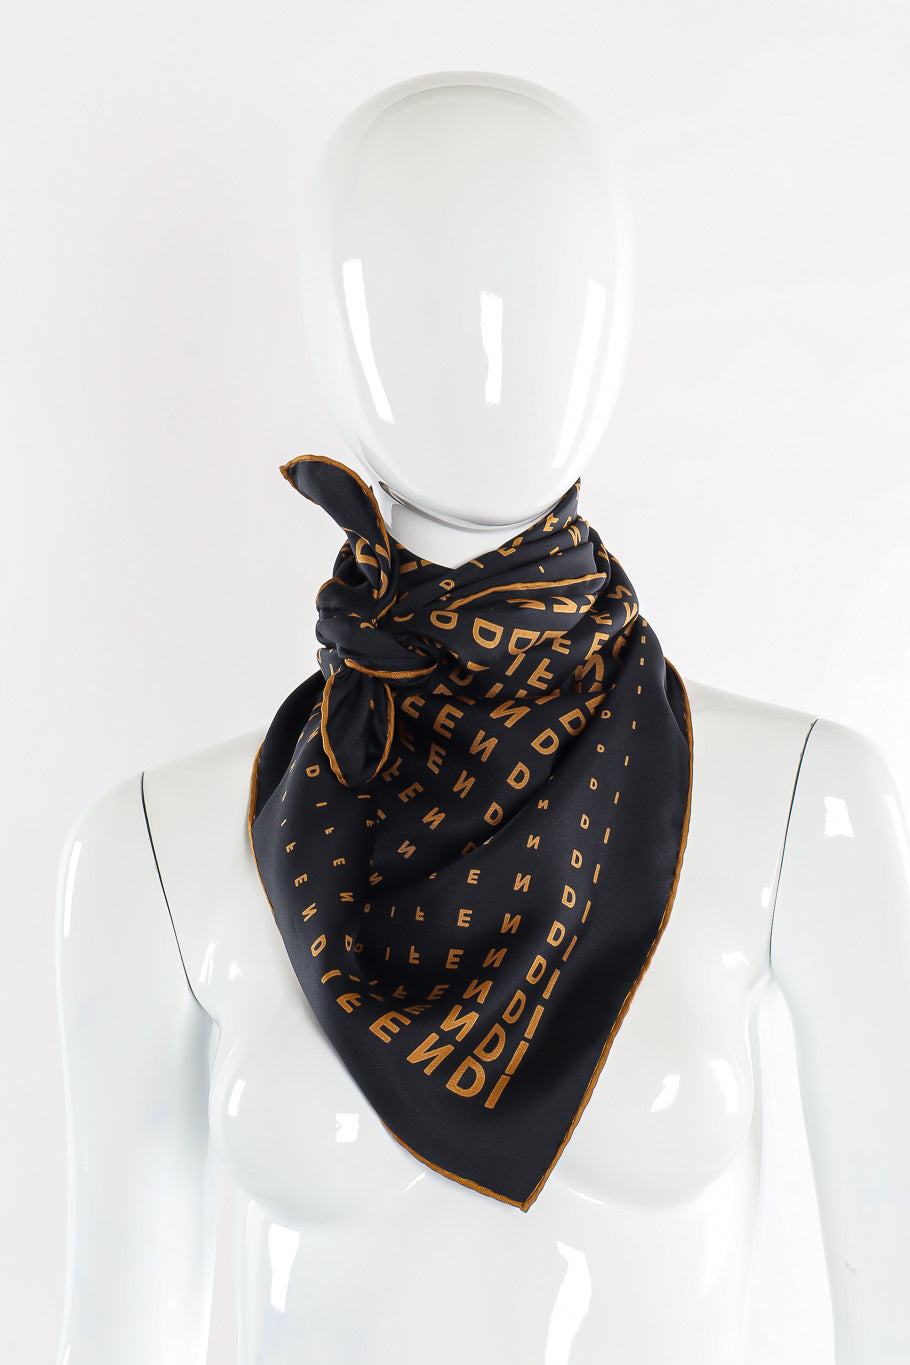 Logo diamond scarf by Fendi mannequin neck tie front @recessla